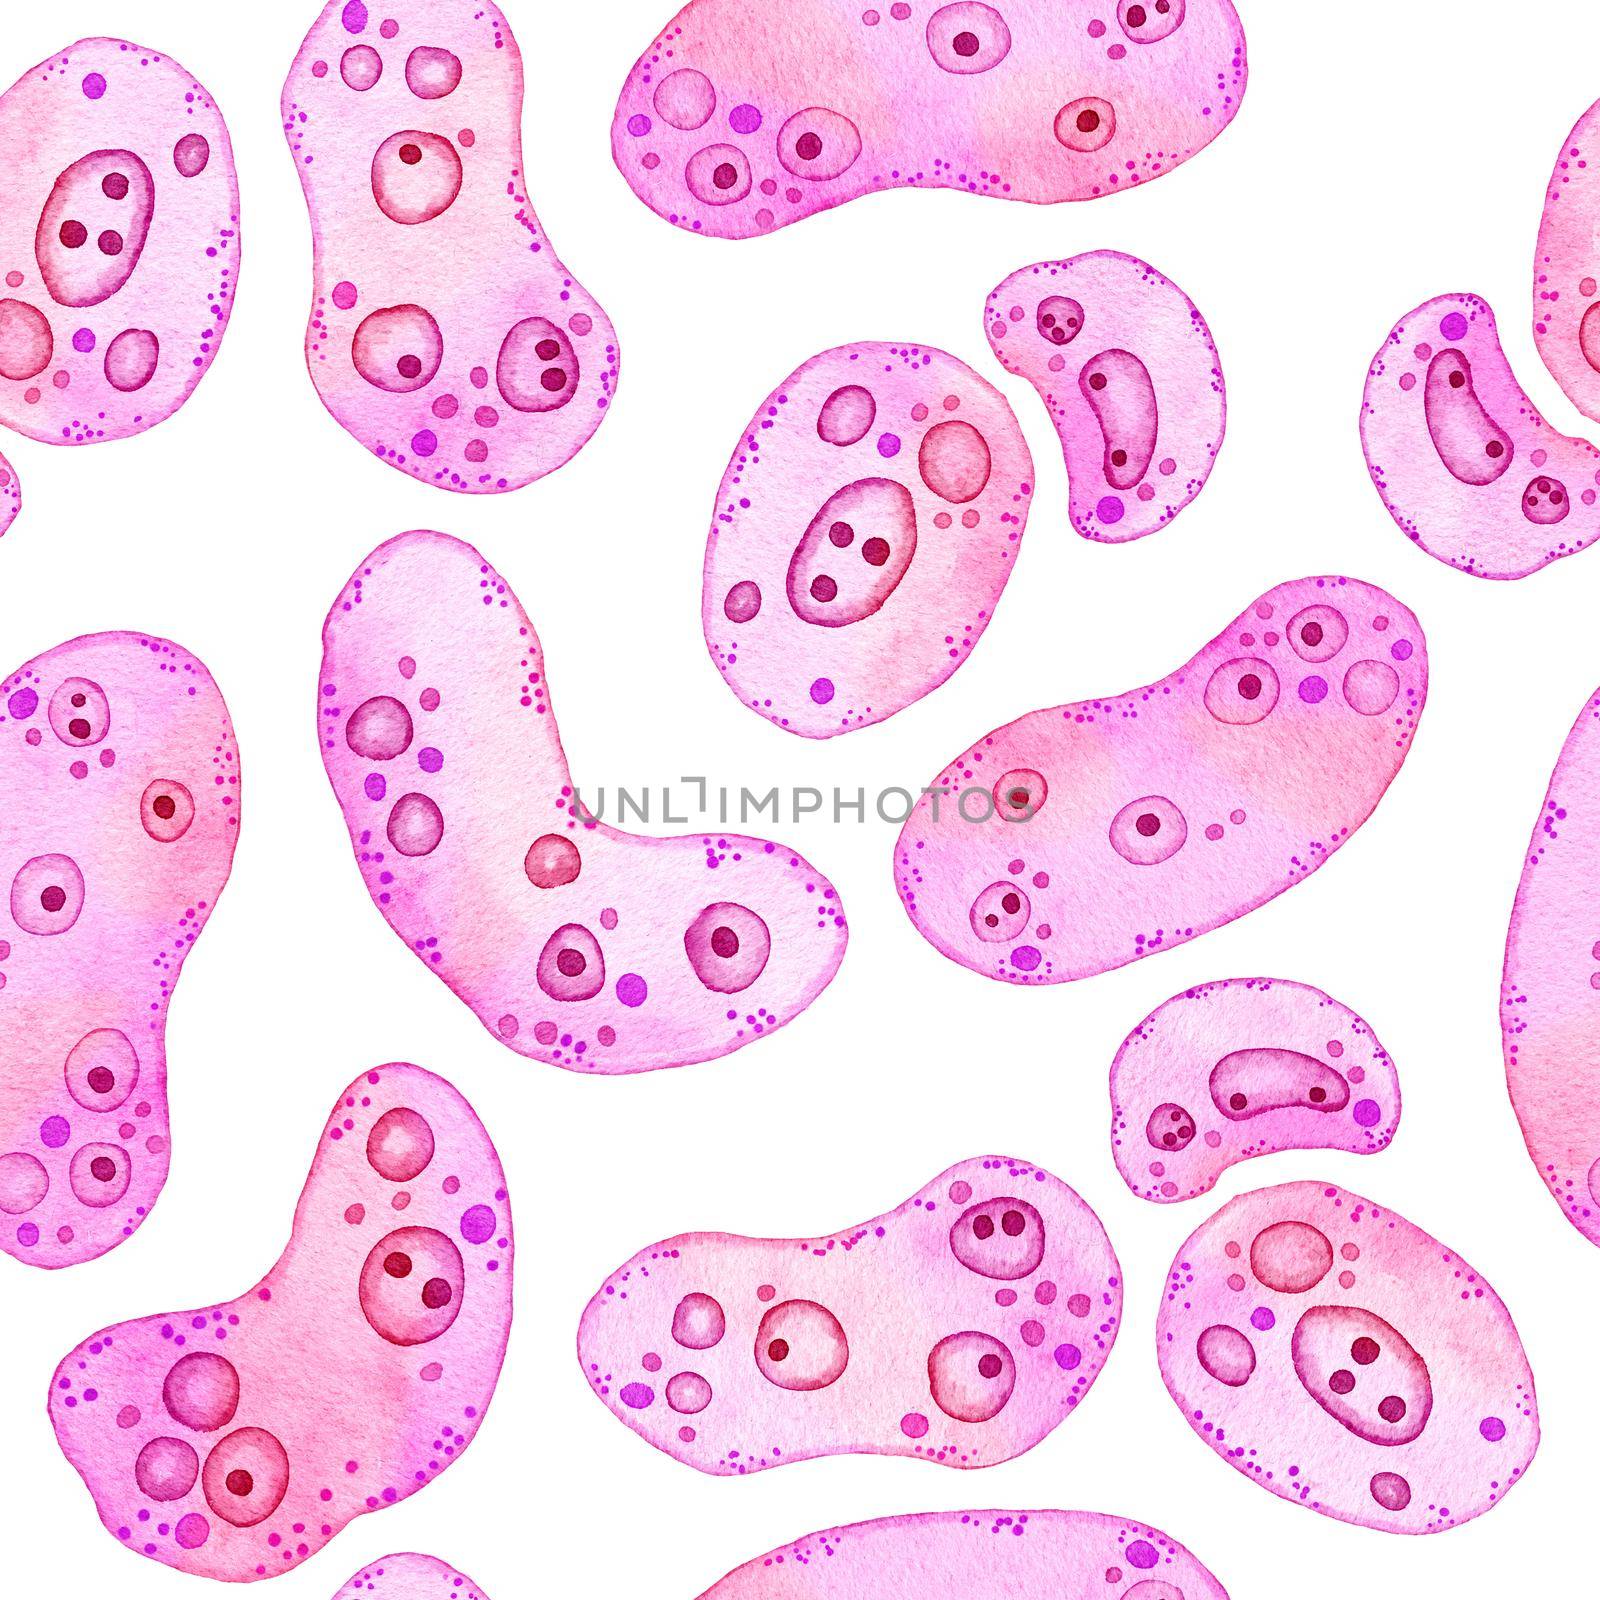 Watercolor seamless pattern of pink purple cells microalgae microorganisms, microscope bio algae. Concept for cosmetics medicine healthcare print design. Pastel ameoba bacteria, soft oval round shape